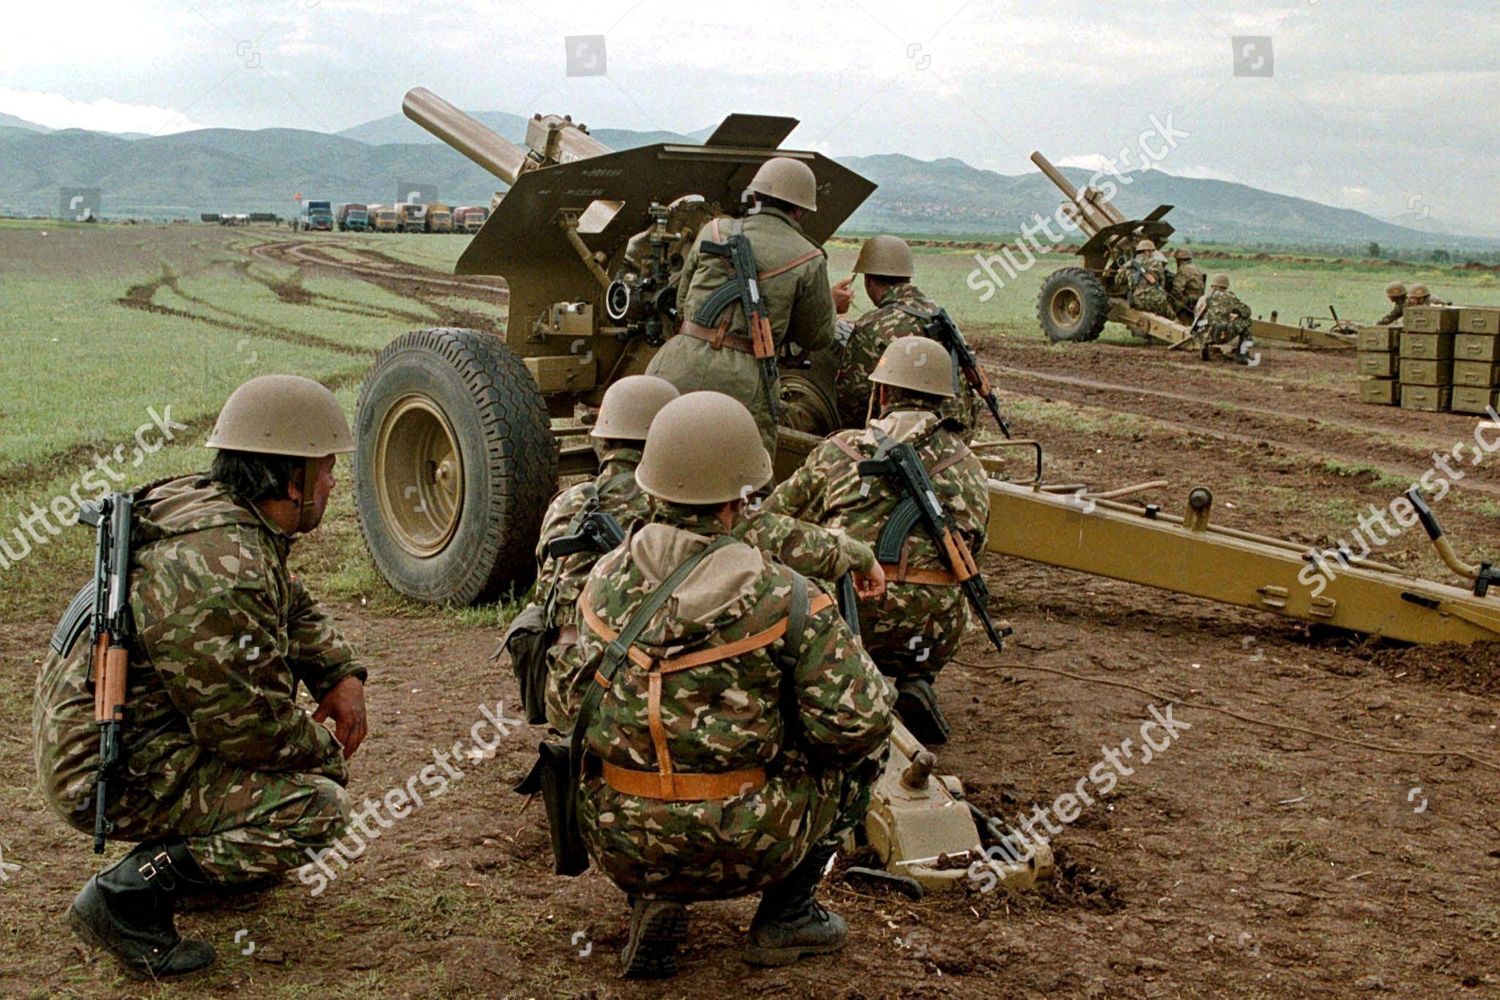 macedonia-howitzer-may-2001-shutterstock-editorial-7739717a.jpg